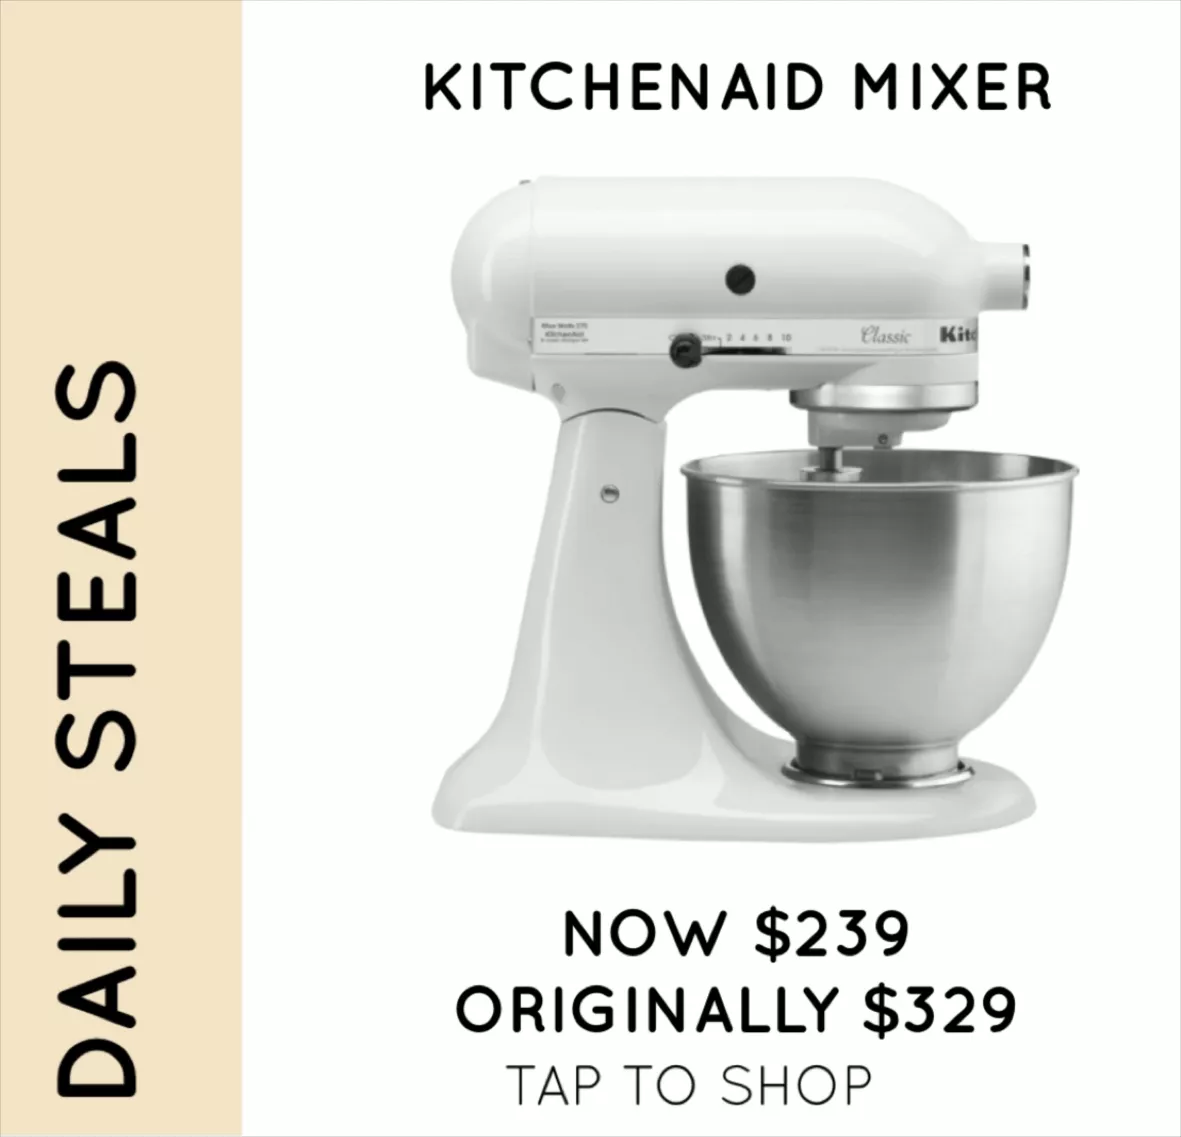 KitchenAid 4.5 Quart Classic Stand Mixer New in Box K45SSWH